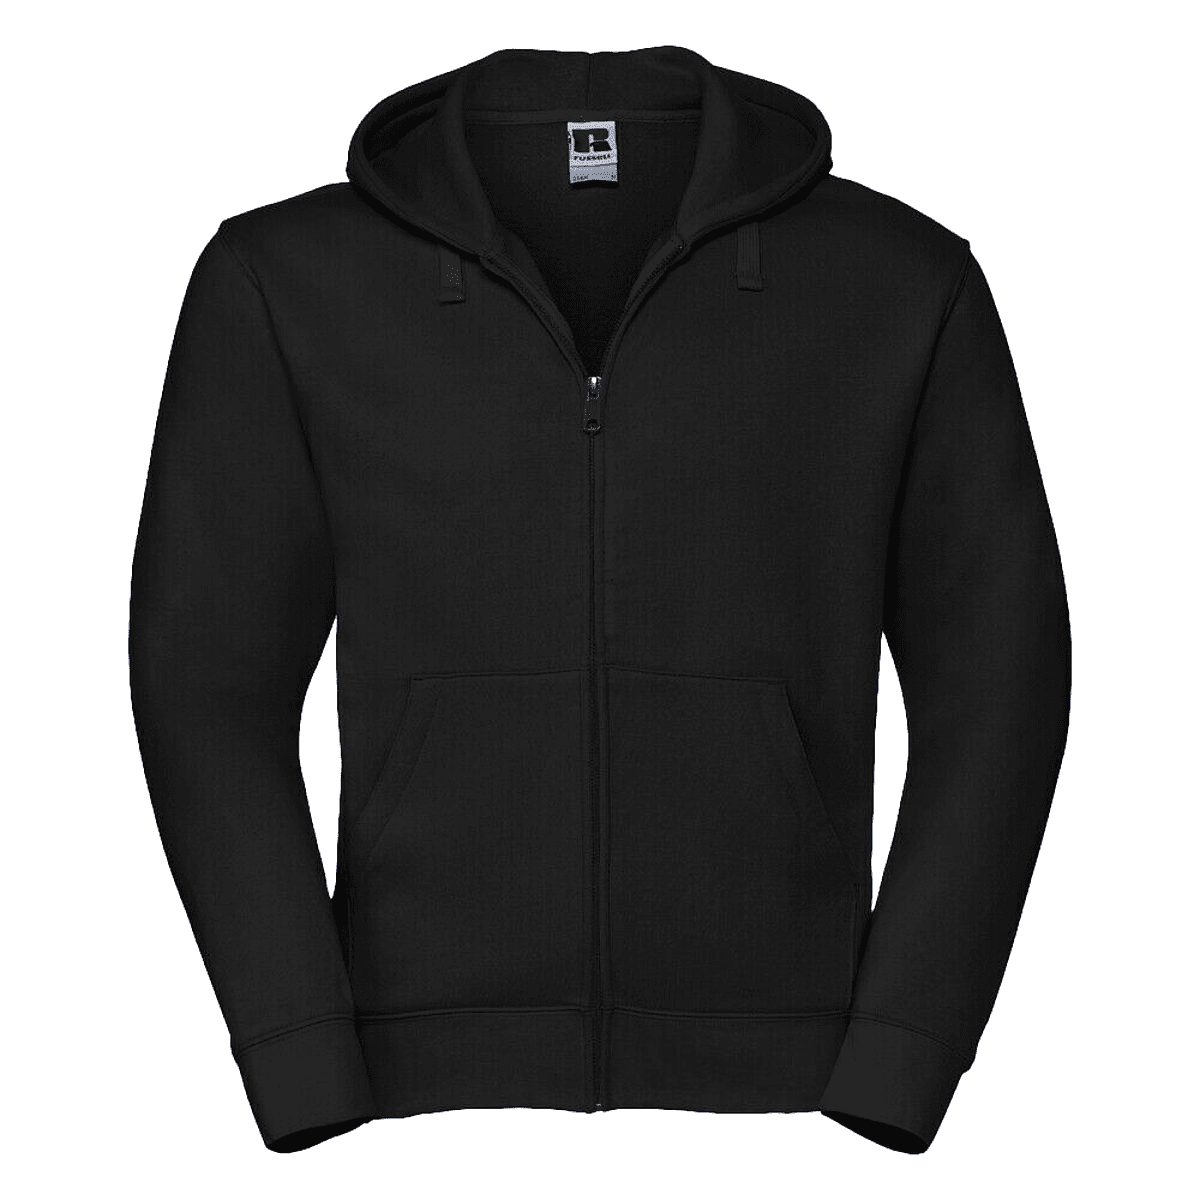 Zip-Sweaterjacke schwarz